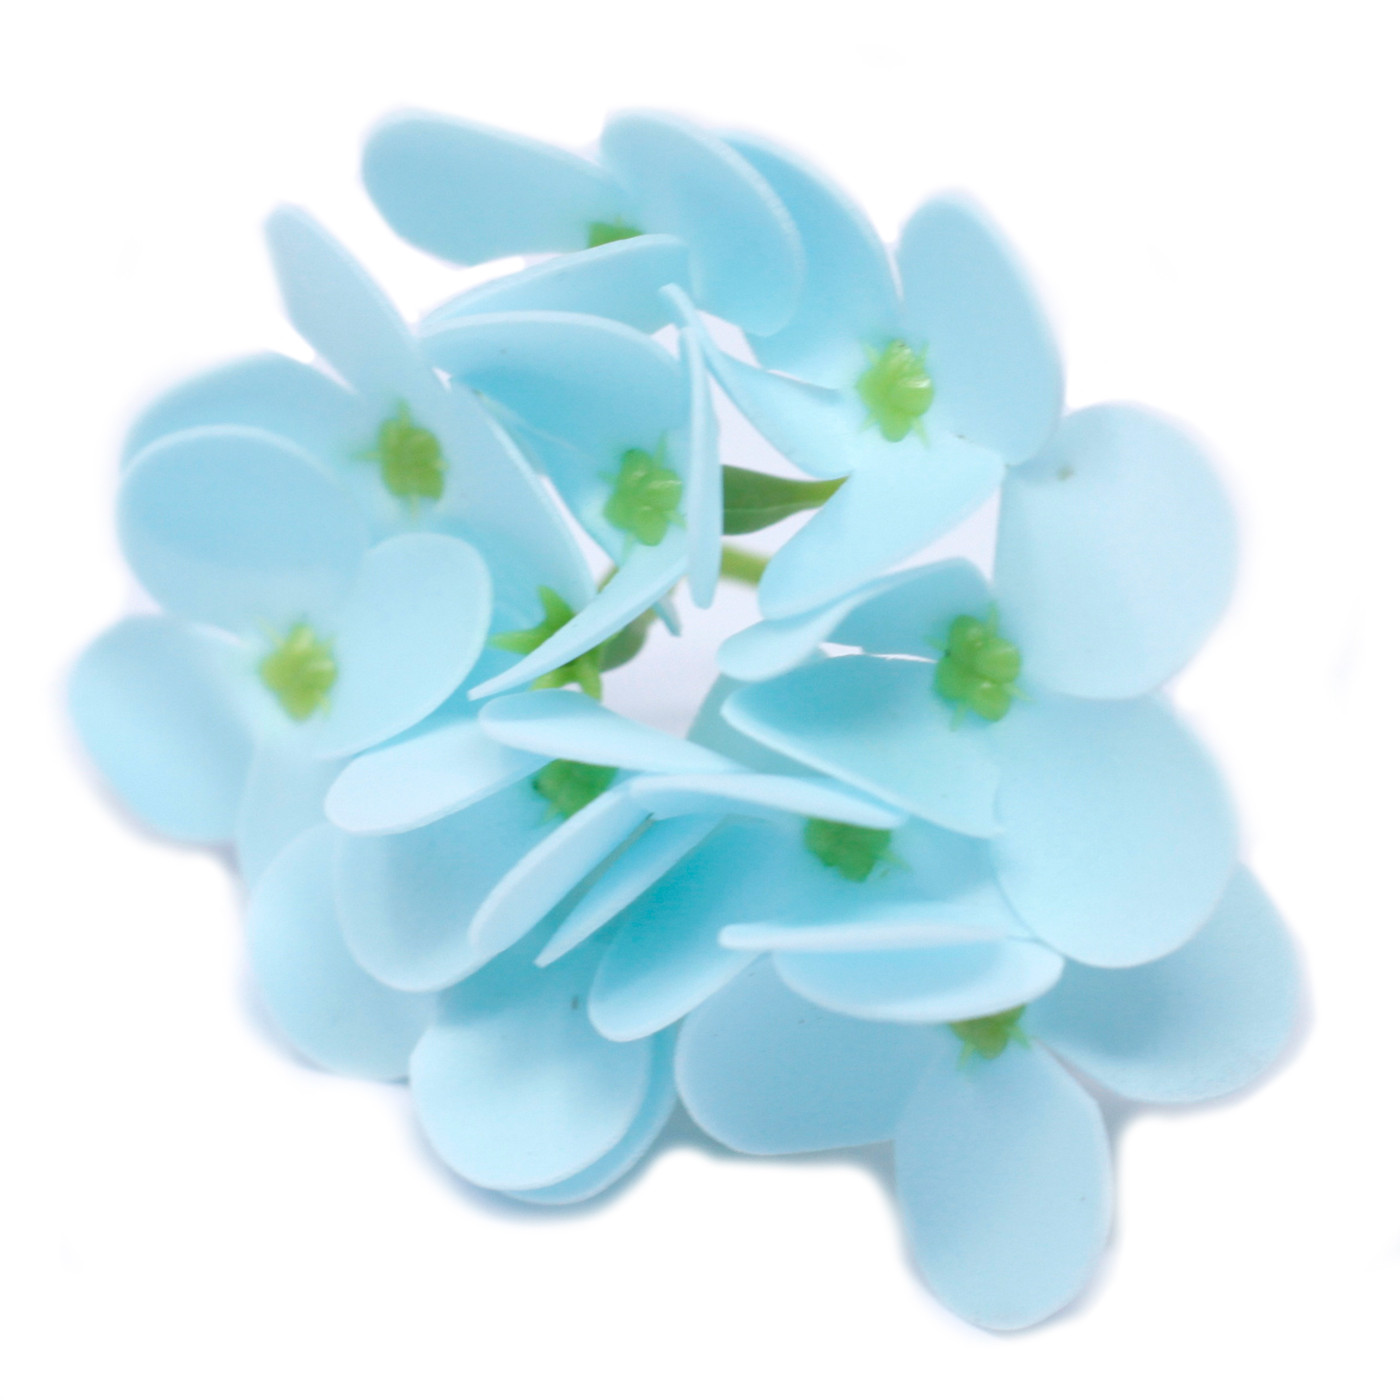 10 x Craft Soap Flowers - Hyacinth Bean - Baby Blue